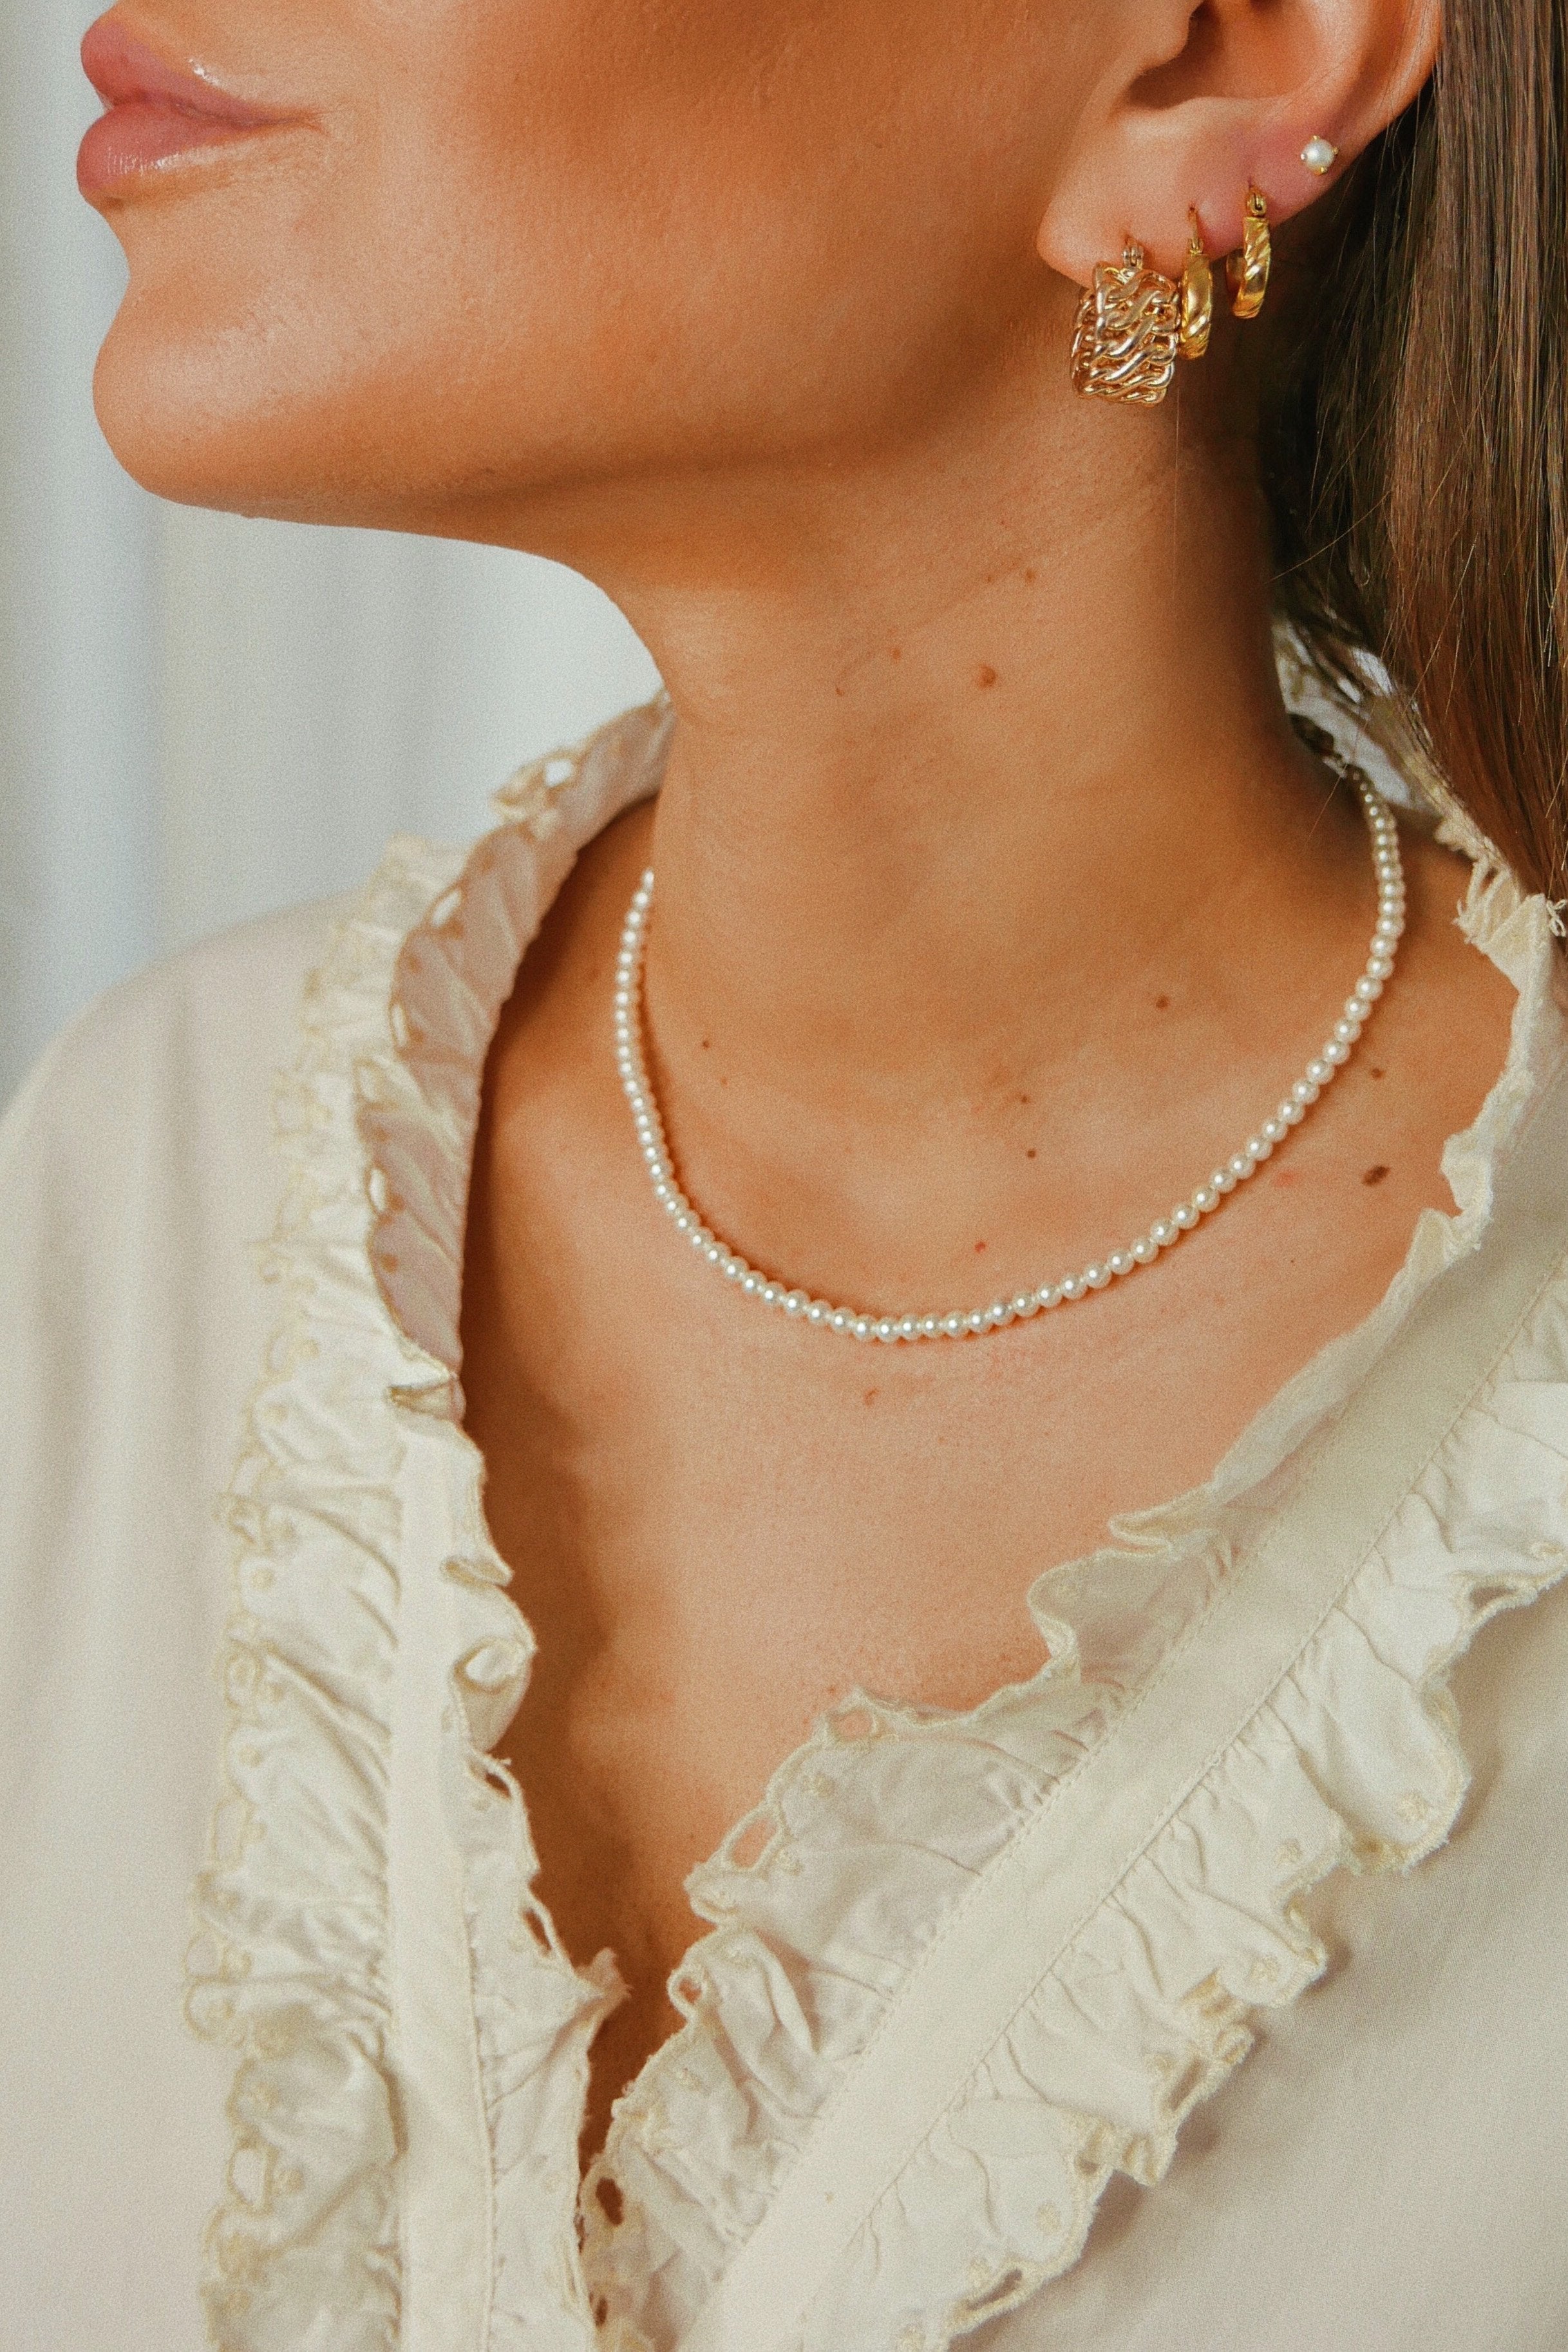 Splendor Necklace - Boutique Minimaliste has waterproof, durable, elegant and vintage inspired jewelry